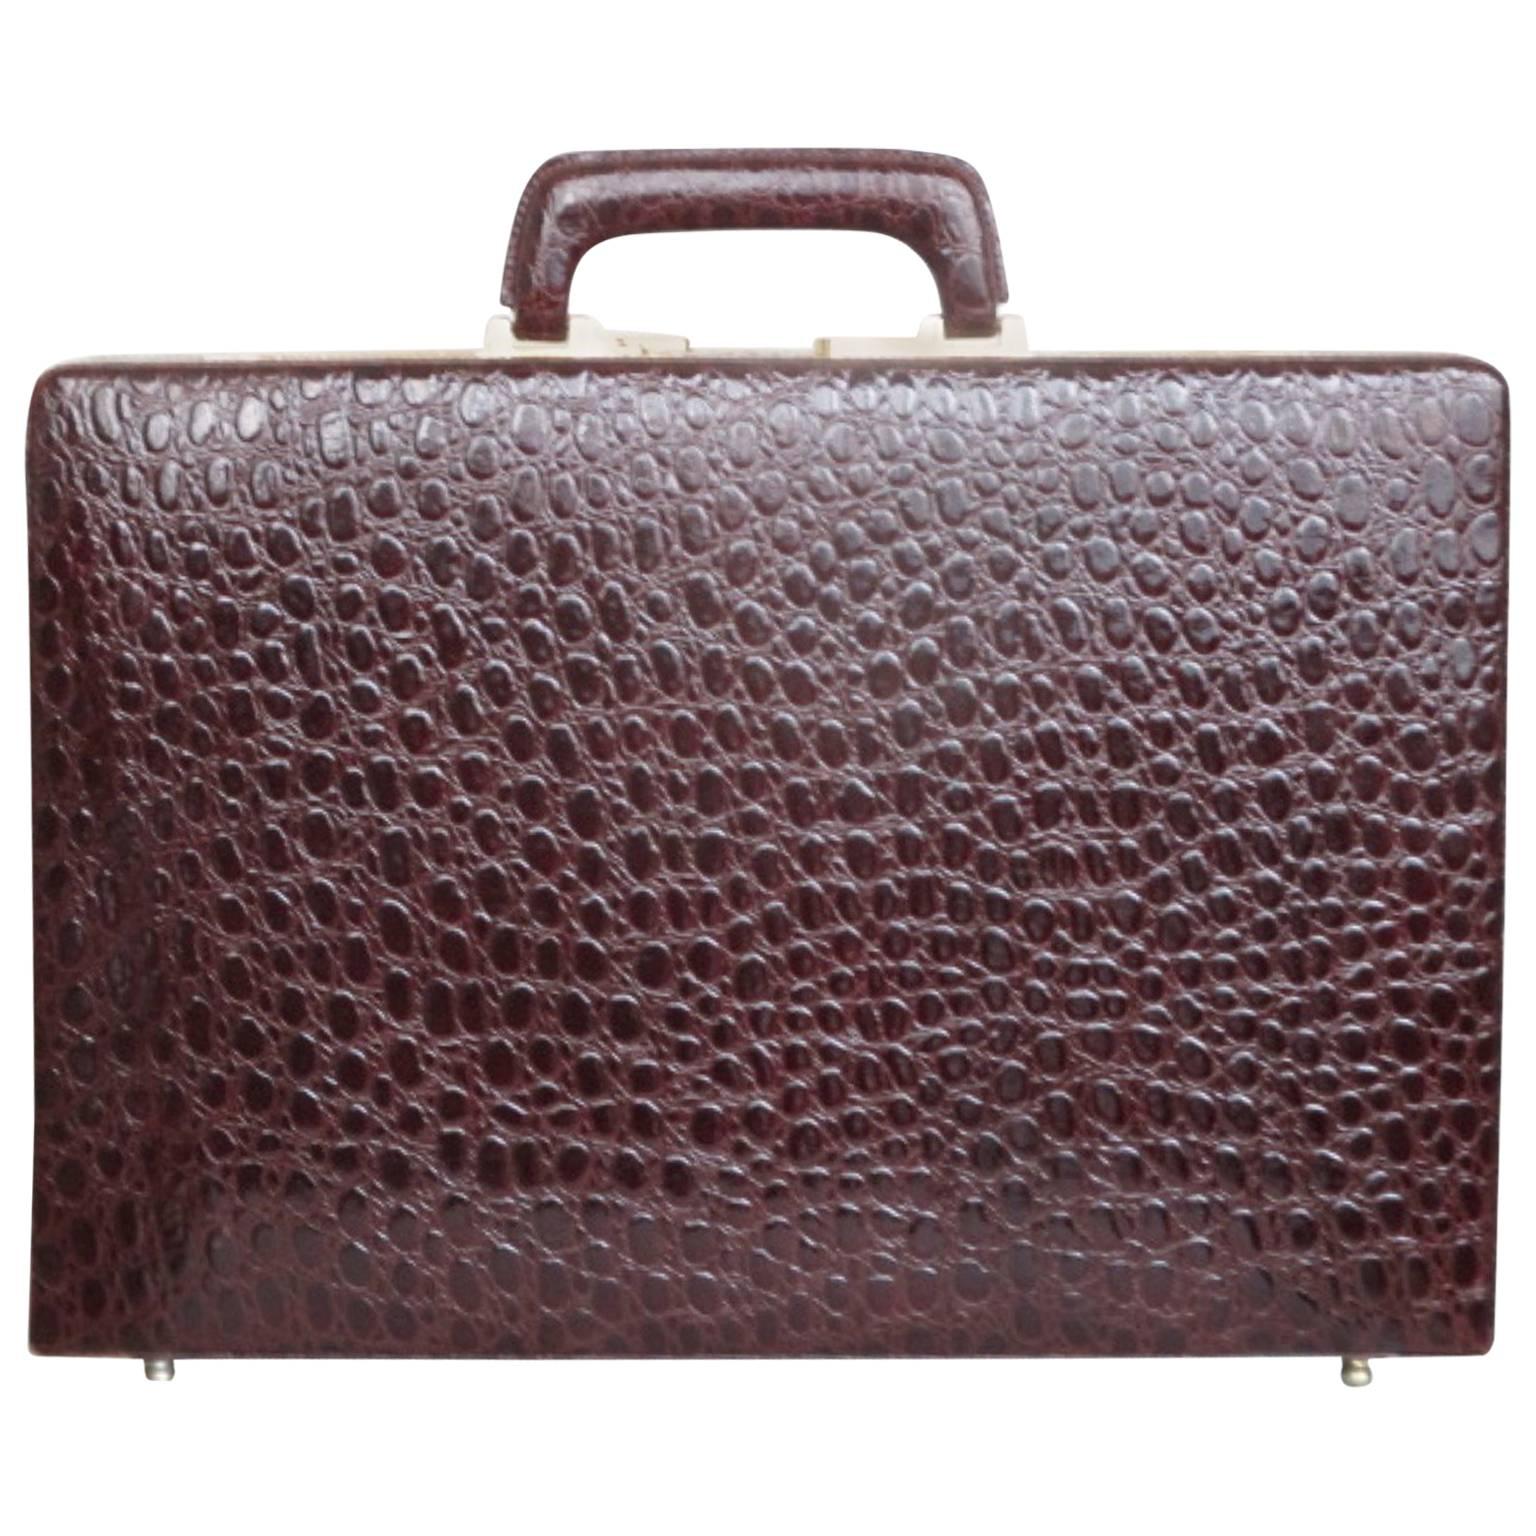 Business Class Patent Leather Presto Briefcase 